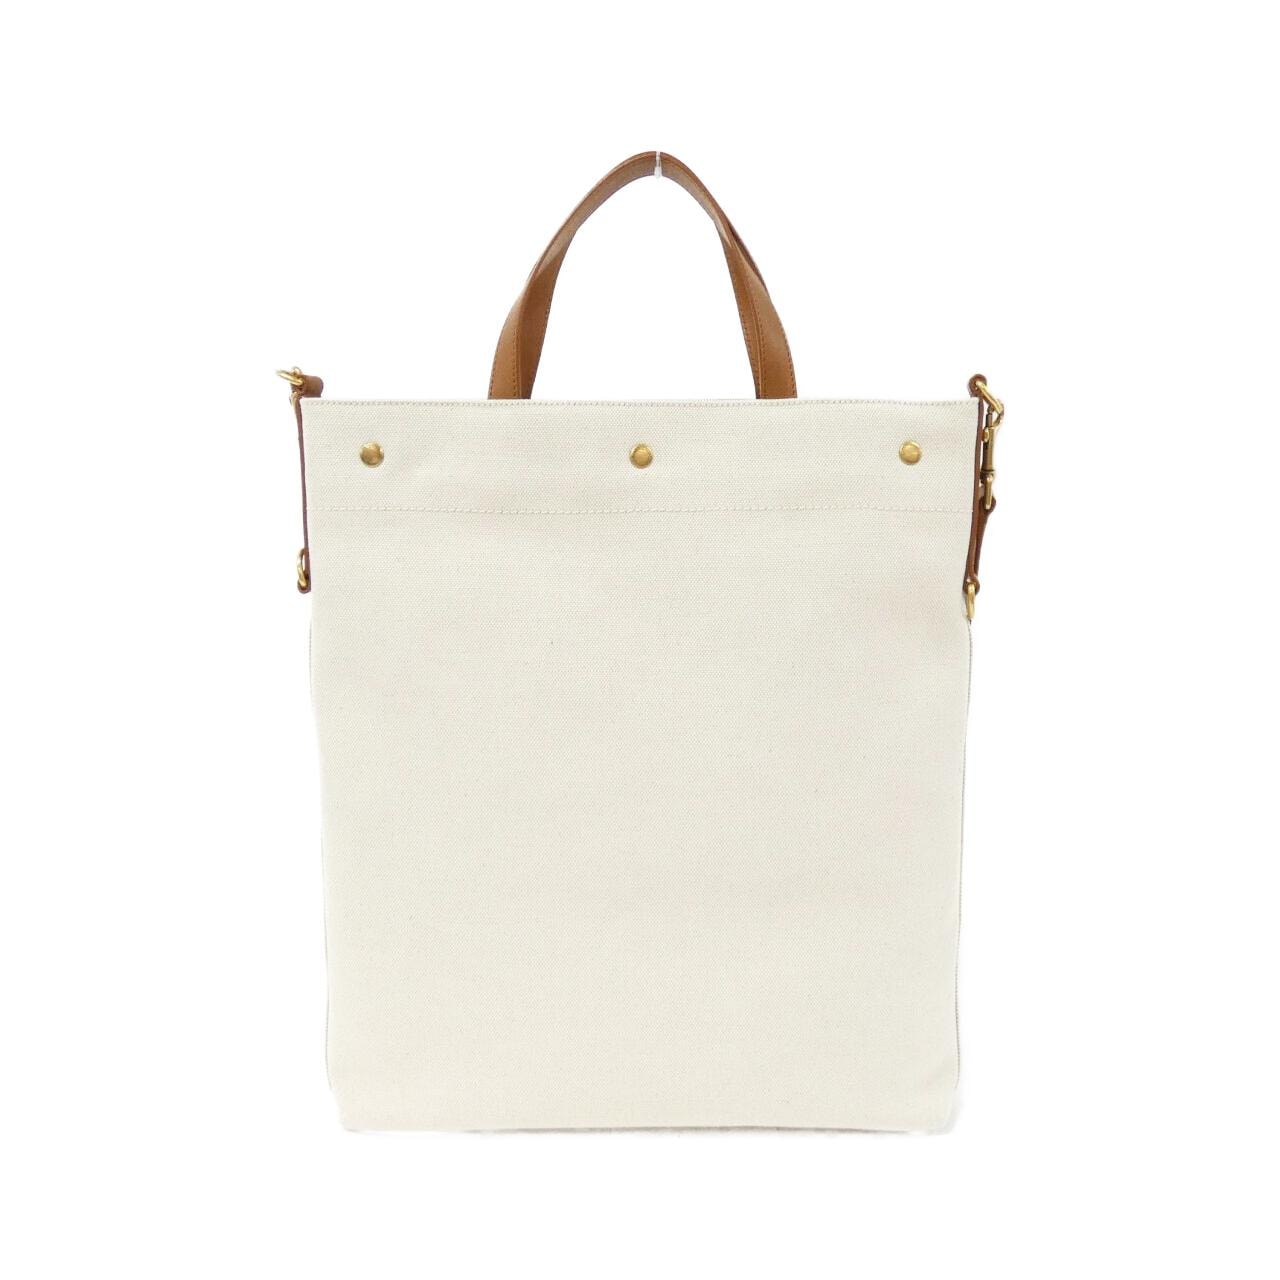 [BRAND NEW] SAINT LAURENT Rive Gauche Lace Bucket Bag 710264 FAAVL Shoulder Bag